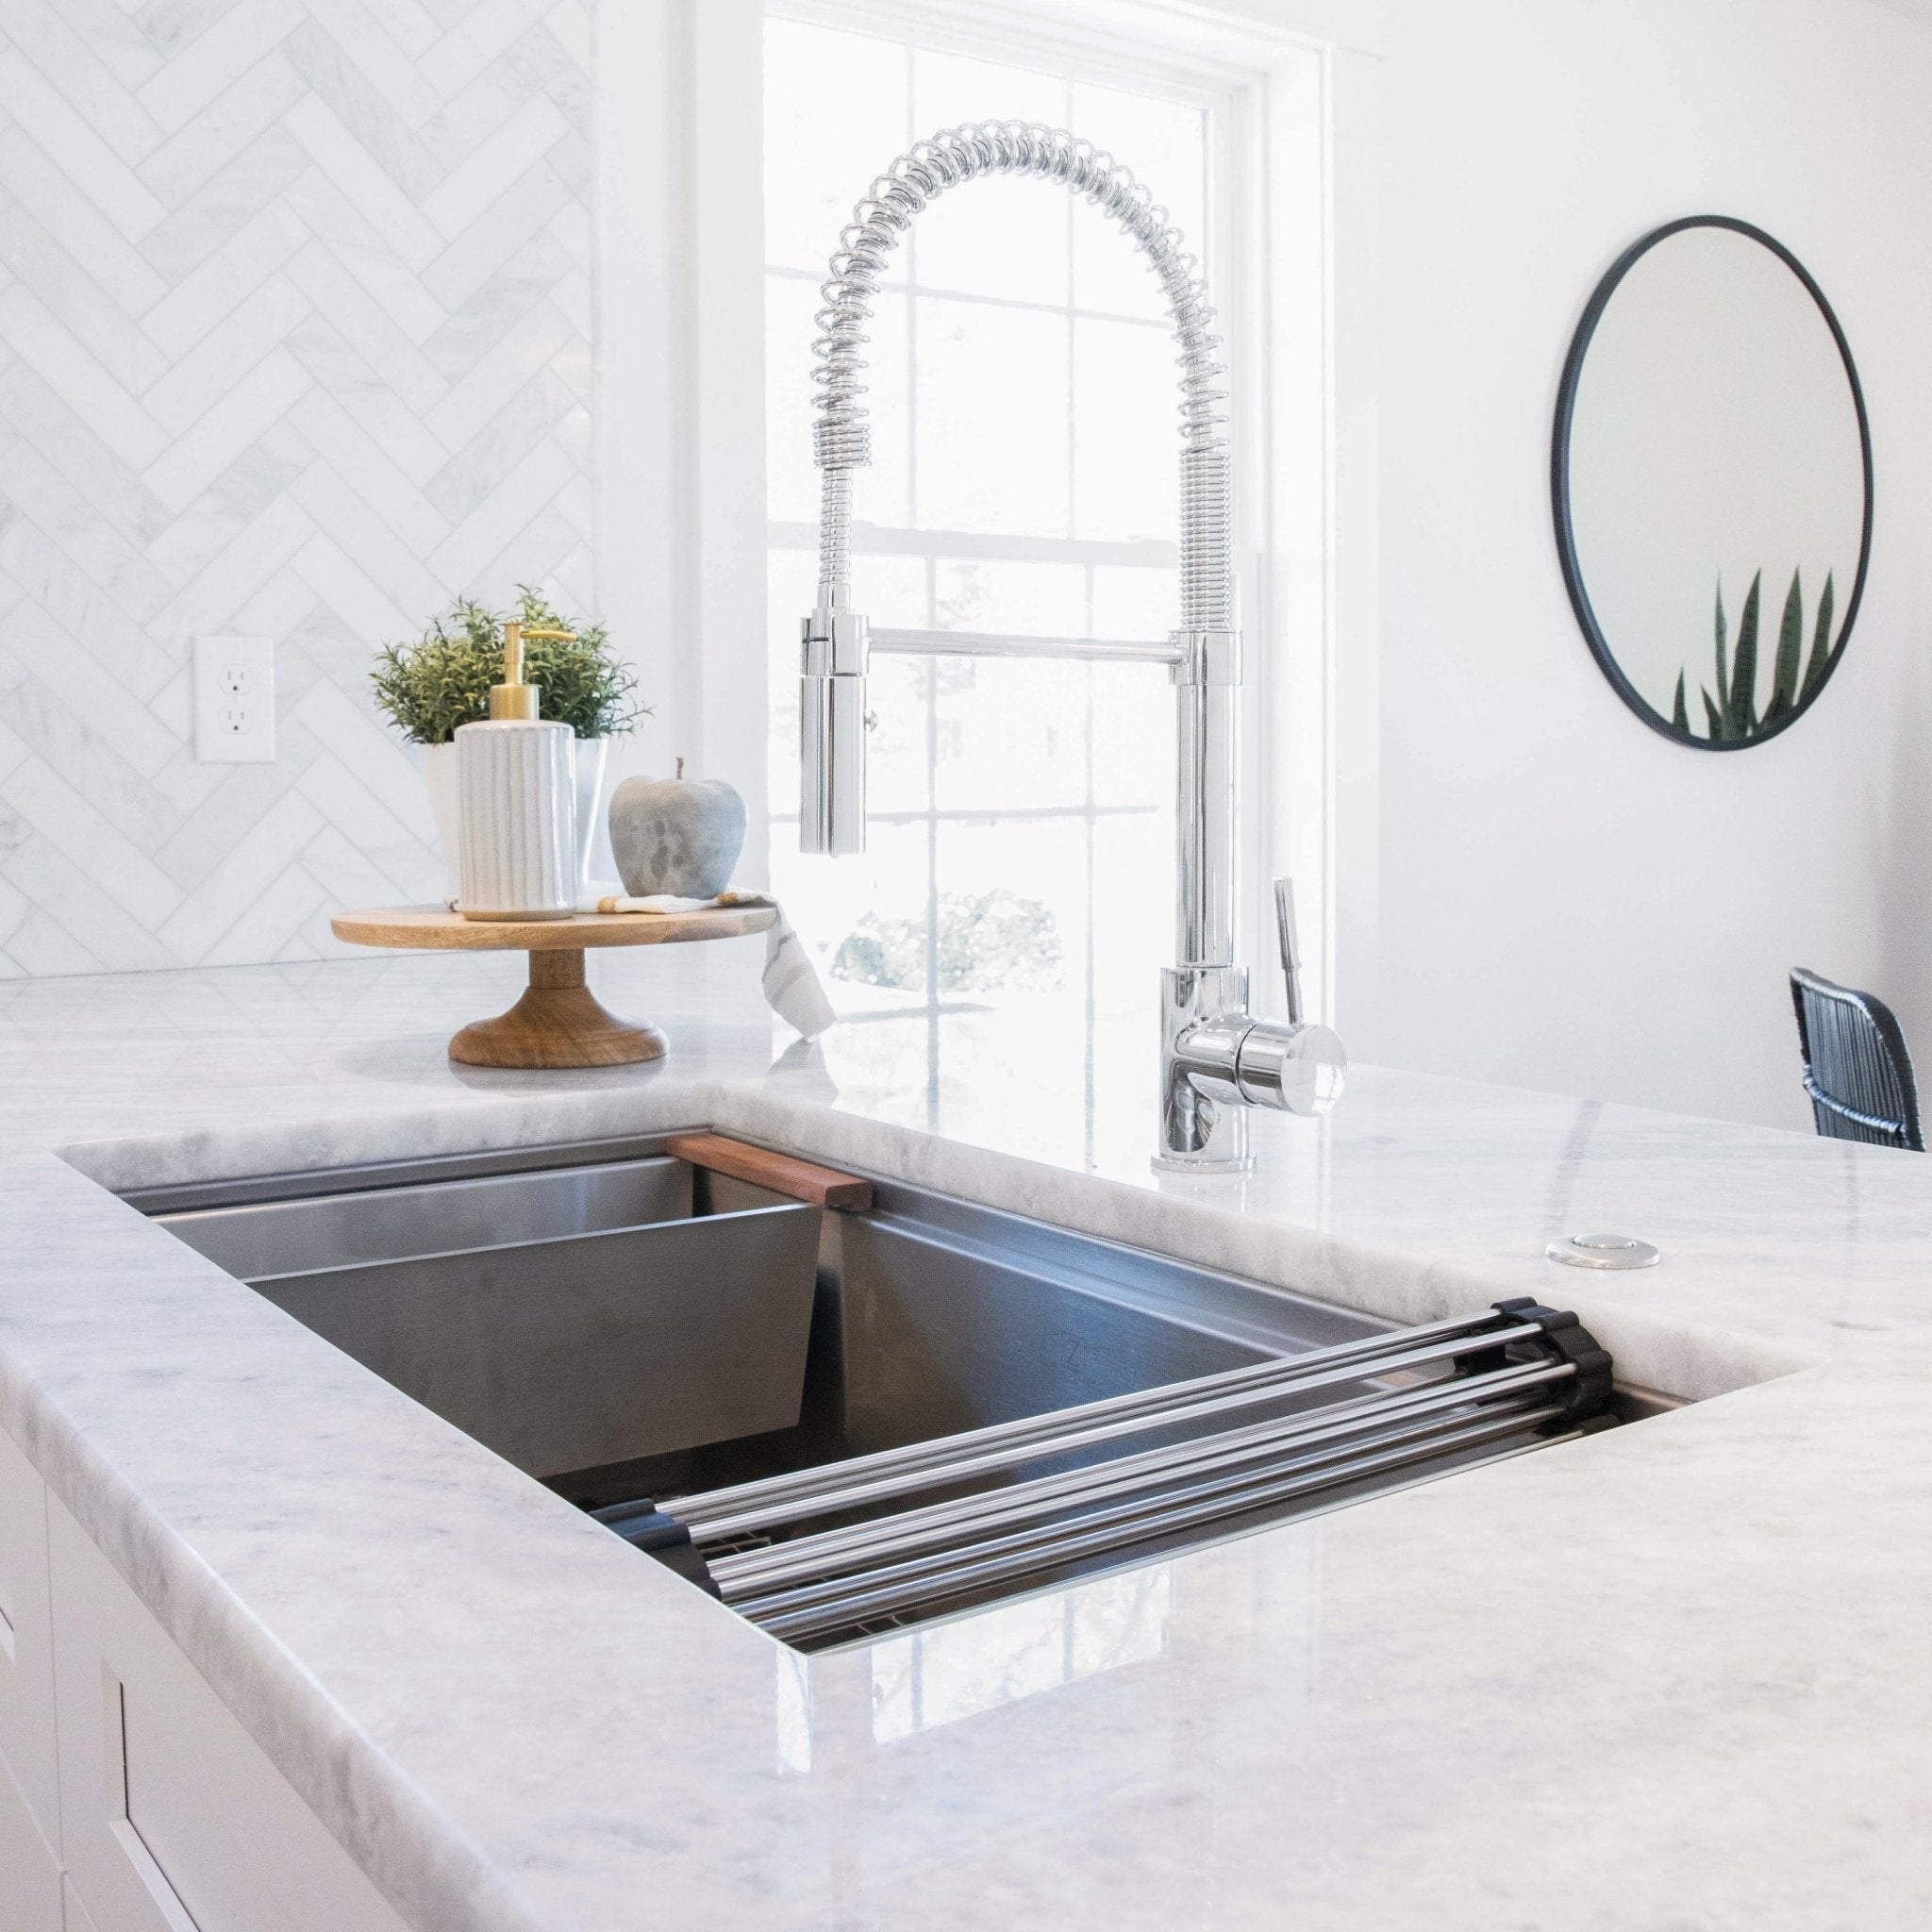 ZLINE Sierra Kitchen Faucet (SRA-KF) with Chrome Finish above farmhouse-style kitchen sink